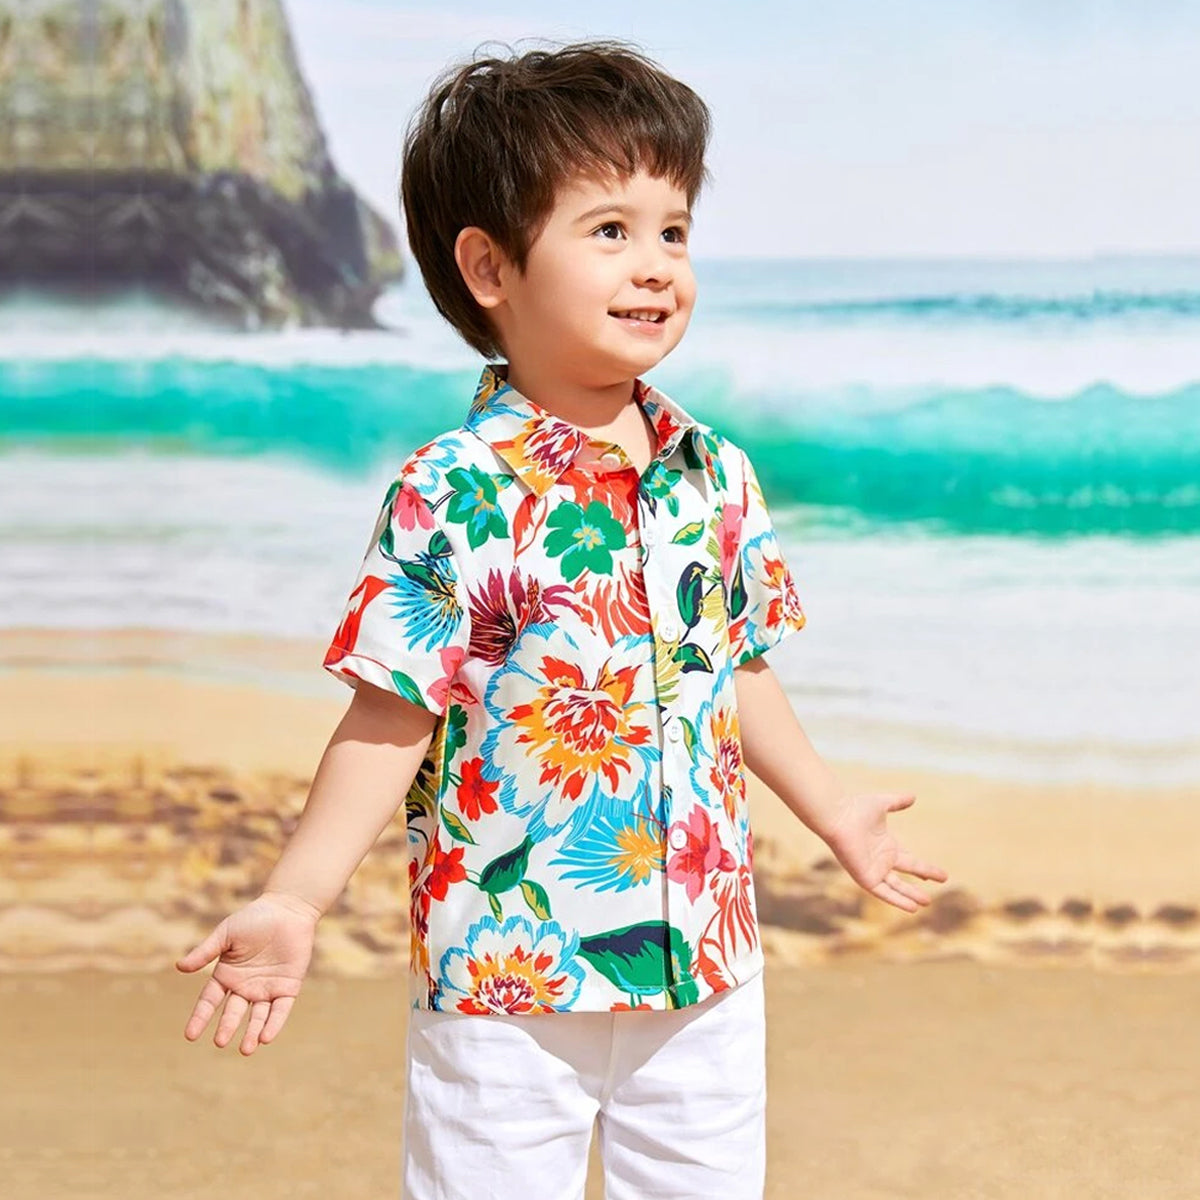 Venutaloza Toddler Boys Floral Graphic Shirt For Boy.